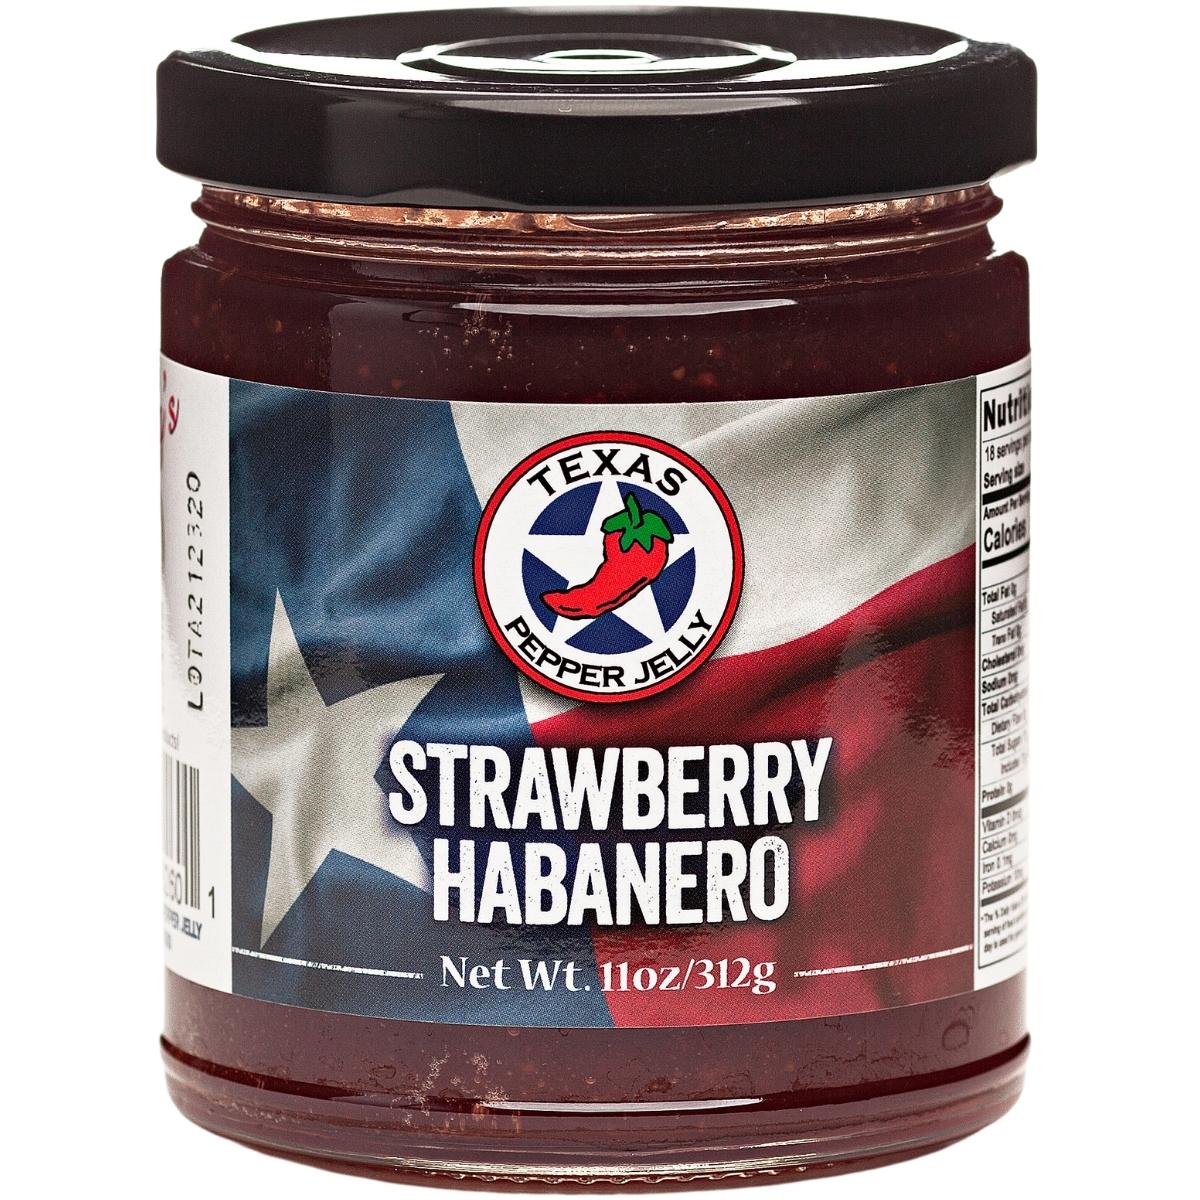 Texas Pepper Jelly Strawberry Habanero